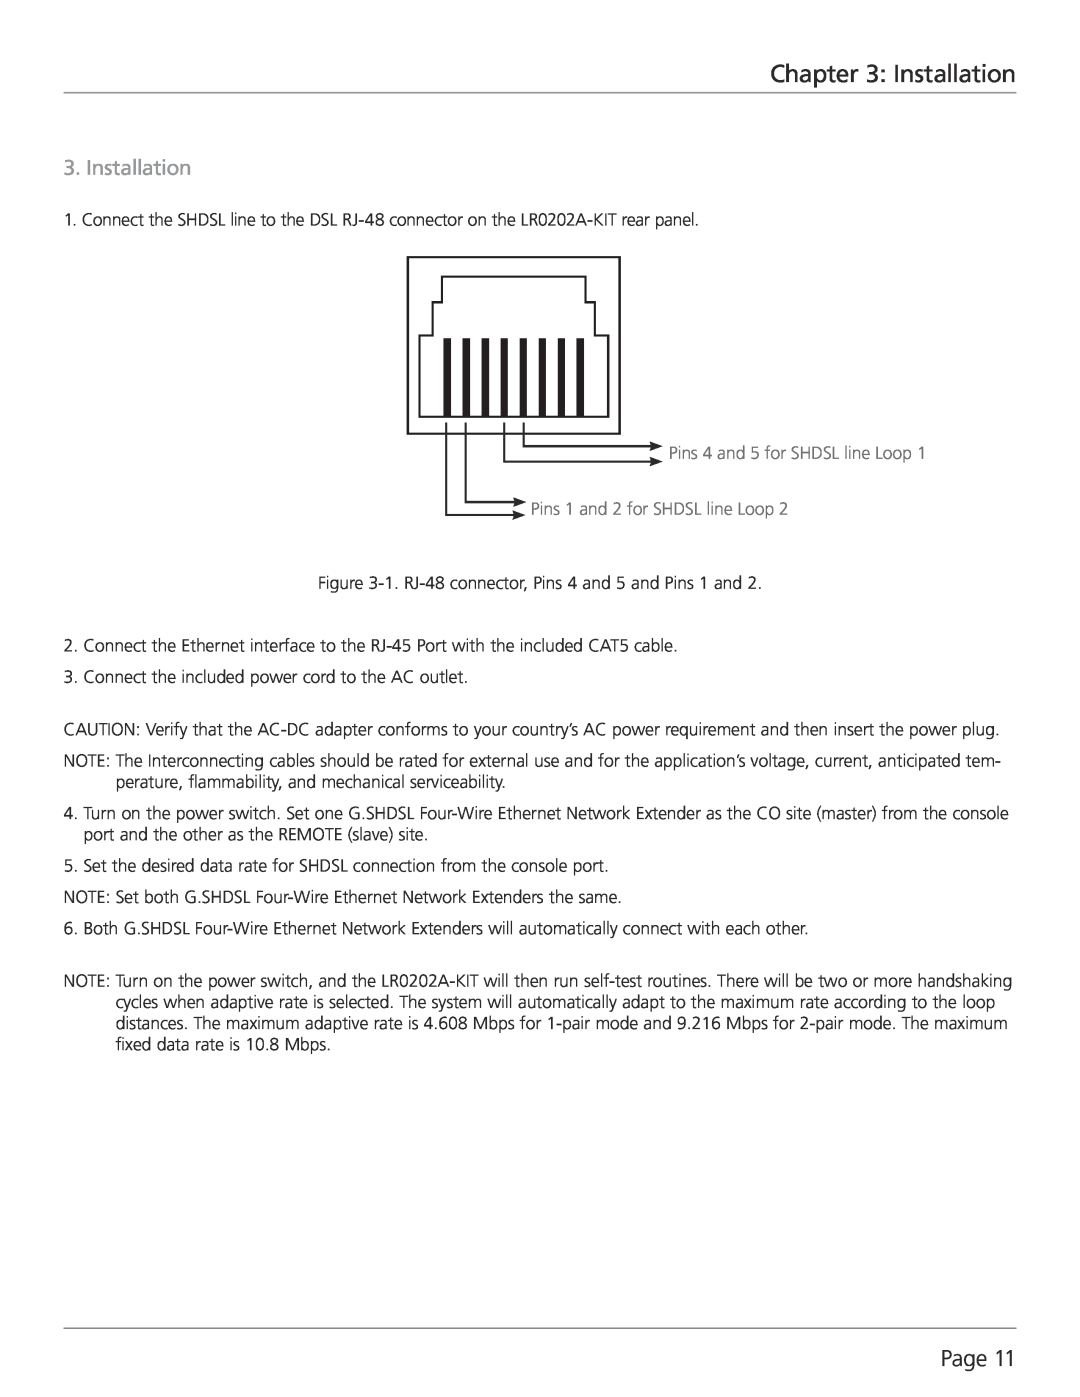 Black Box G.SHDSL Four-Wire Ethernet Network Extender Kit, LR0202A-KIT manual Installation, Page 